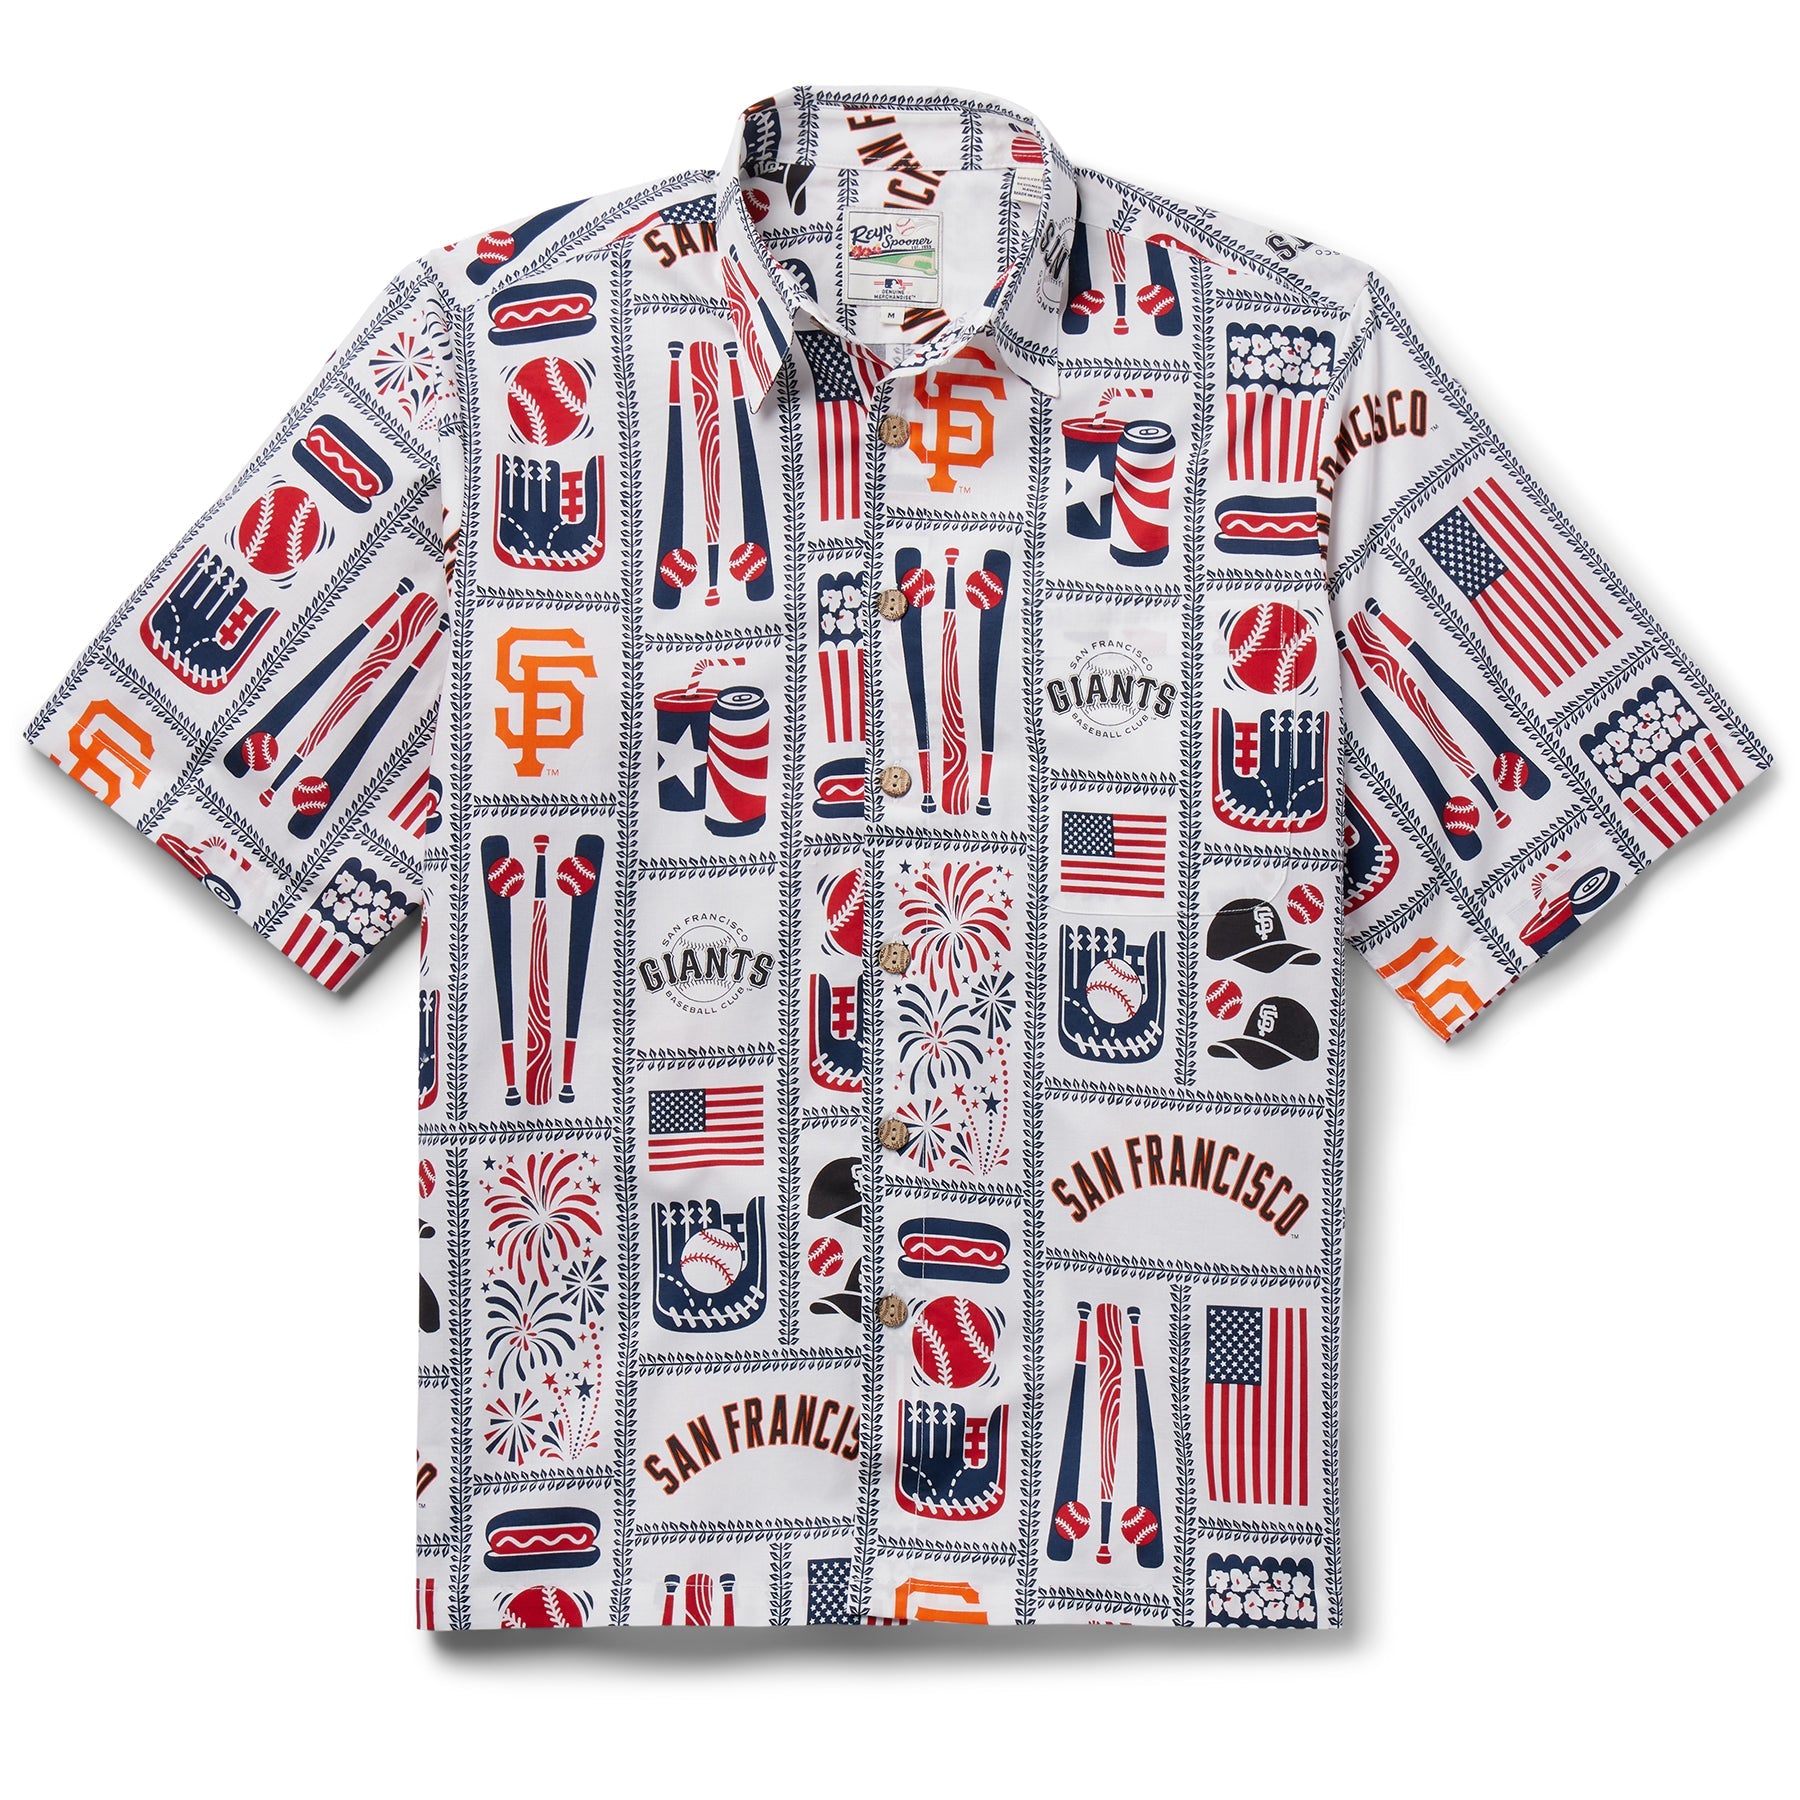 Reyn Spooner Giants Baseball San Francisco Giants Americana T-Shirt Medium White